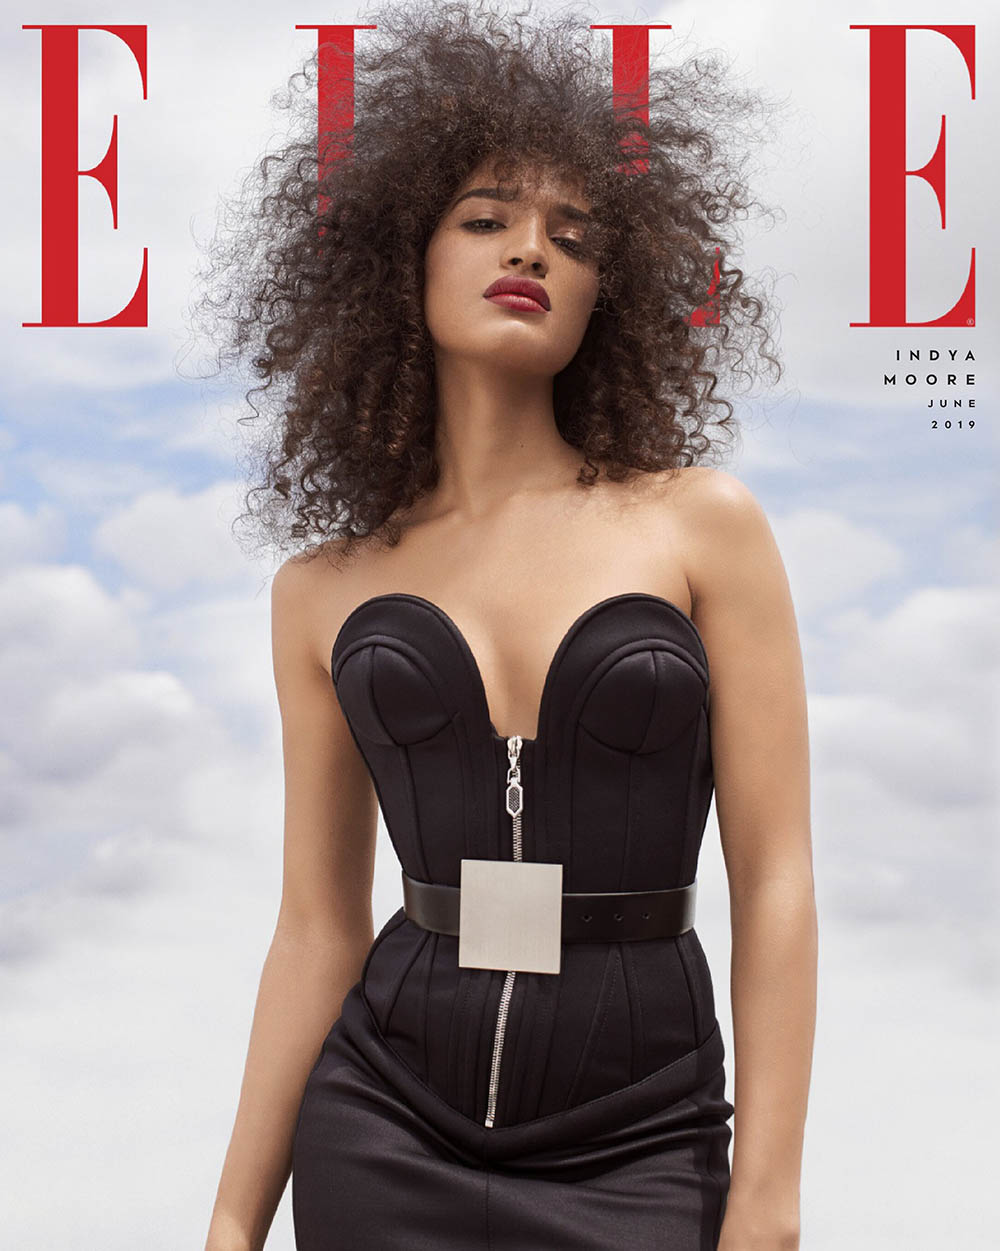 Indya Moore covers Elle US June 2019 by Zoey Grossman